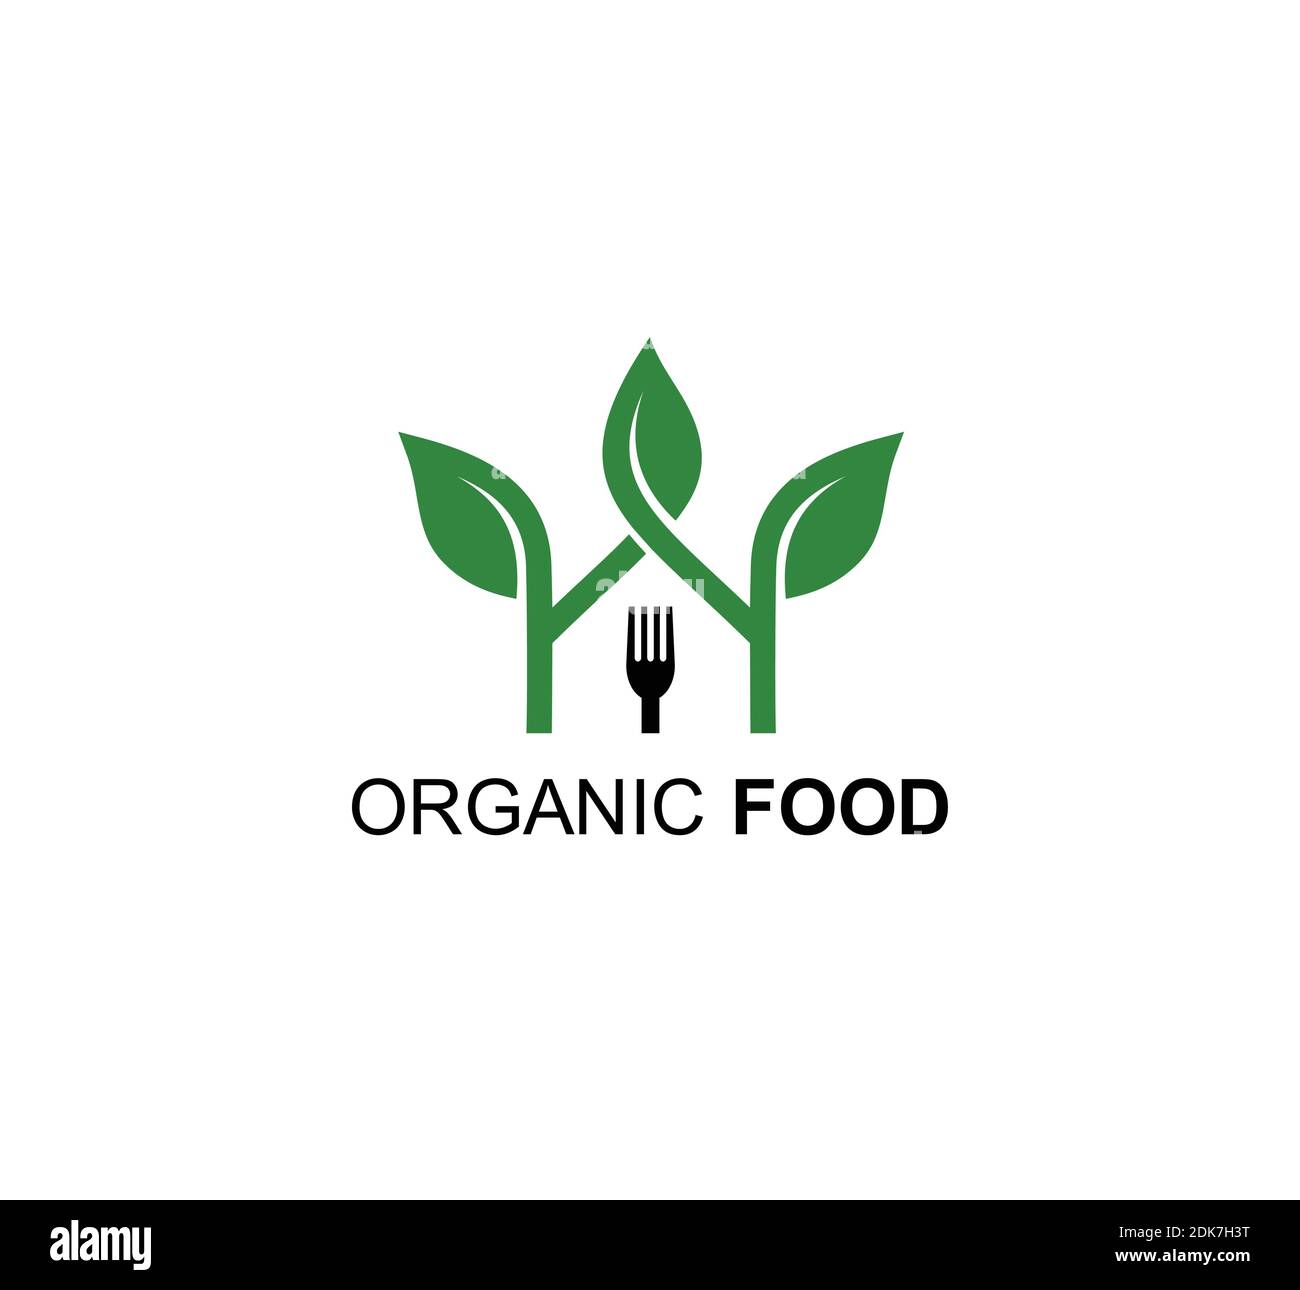 Food logo design Stock Vector Images - Alamy